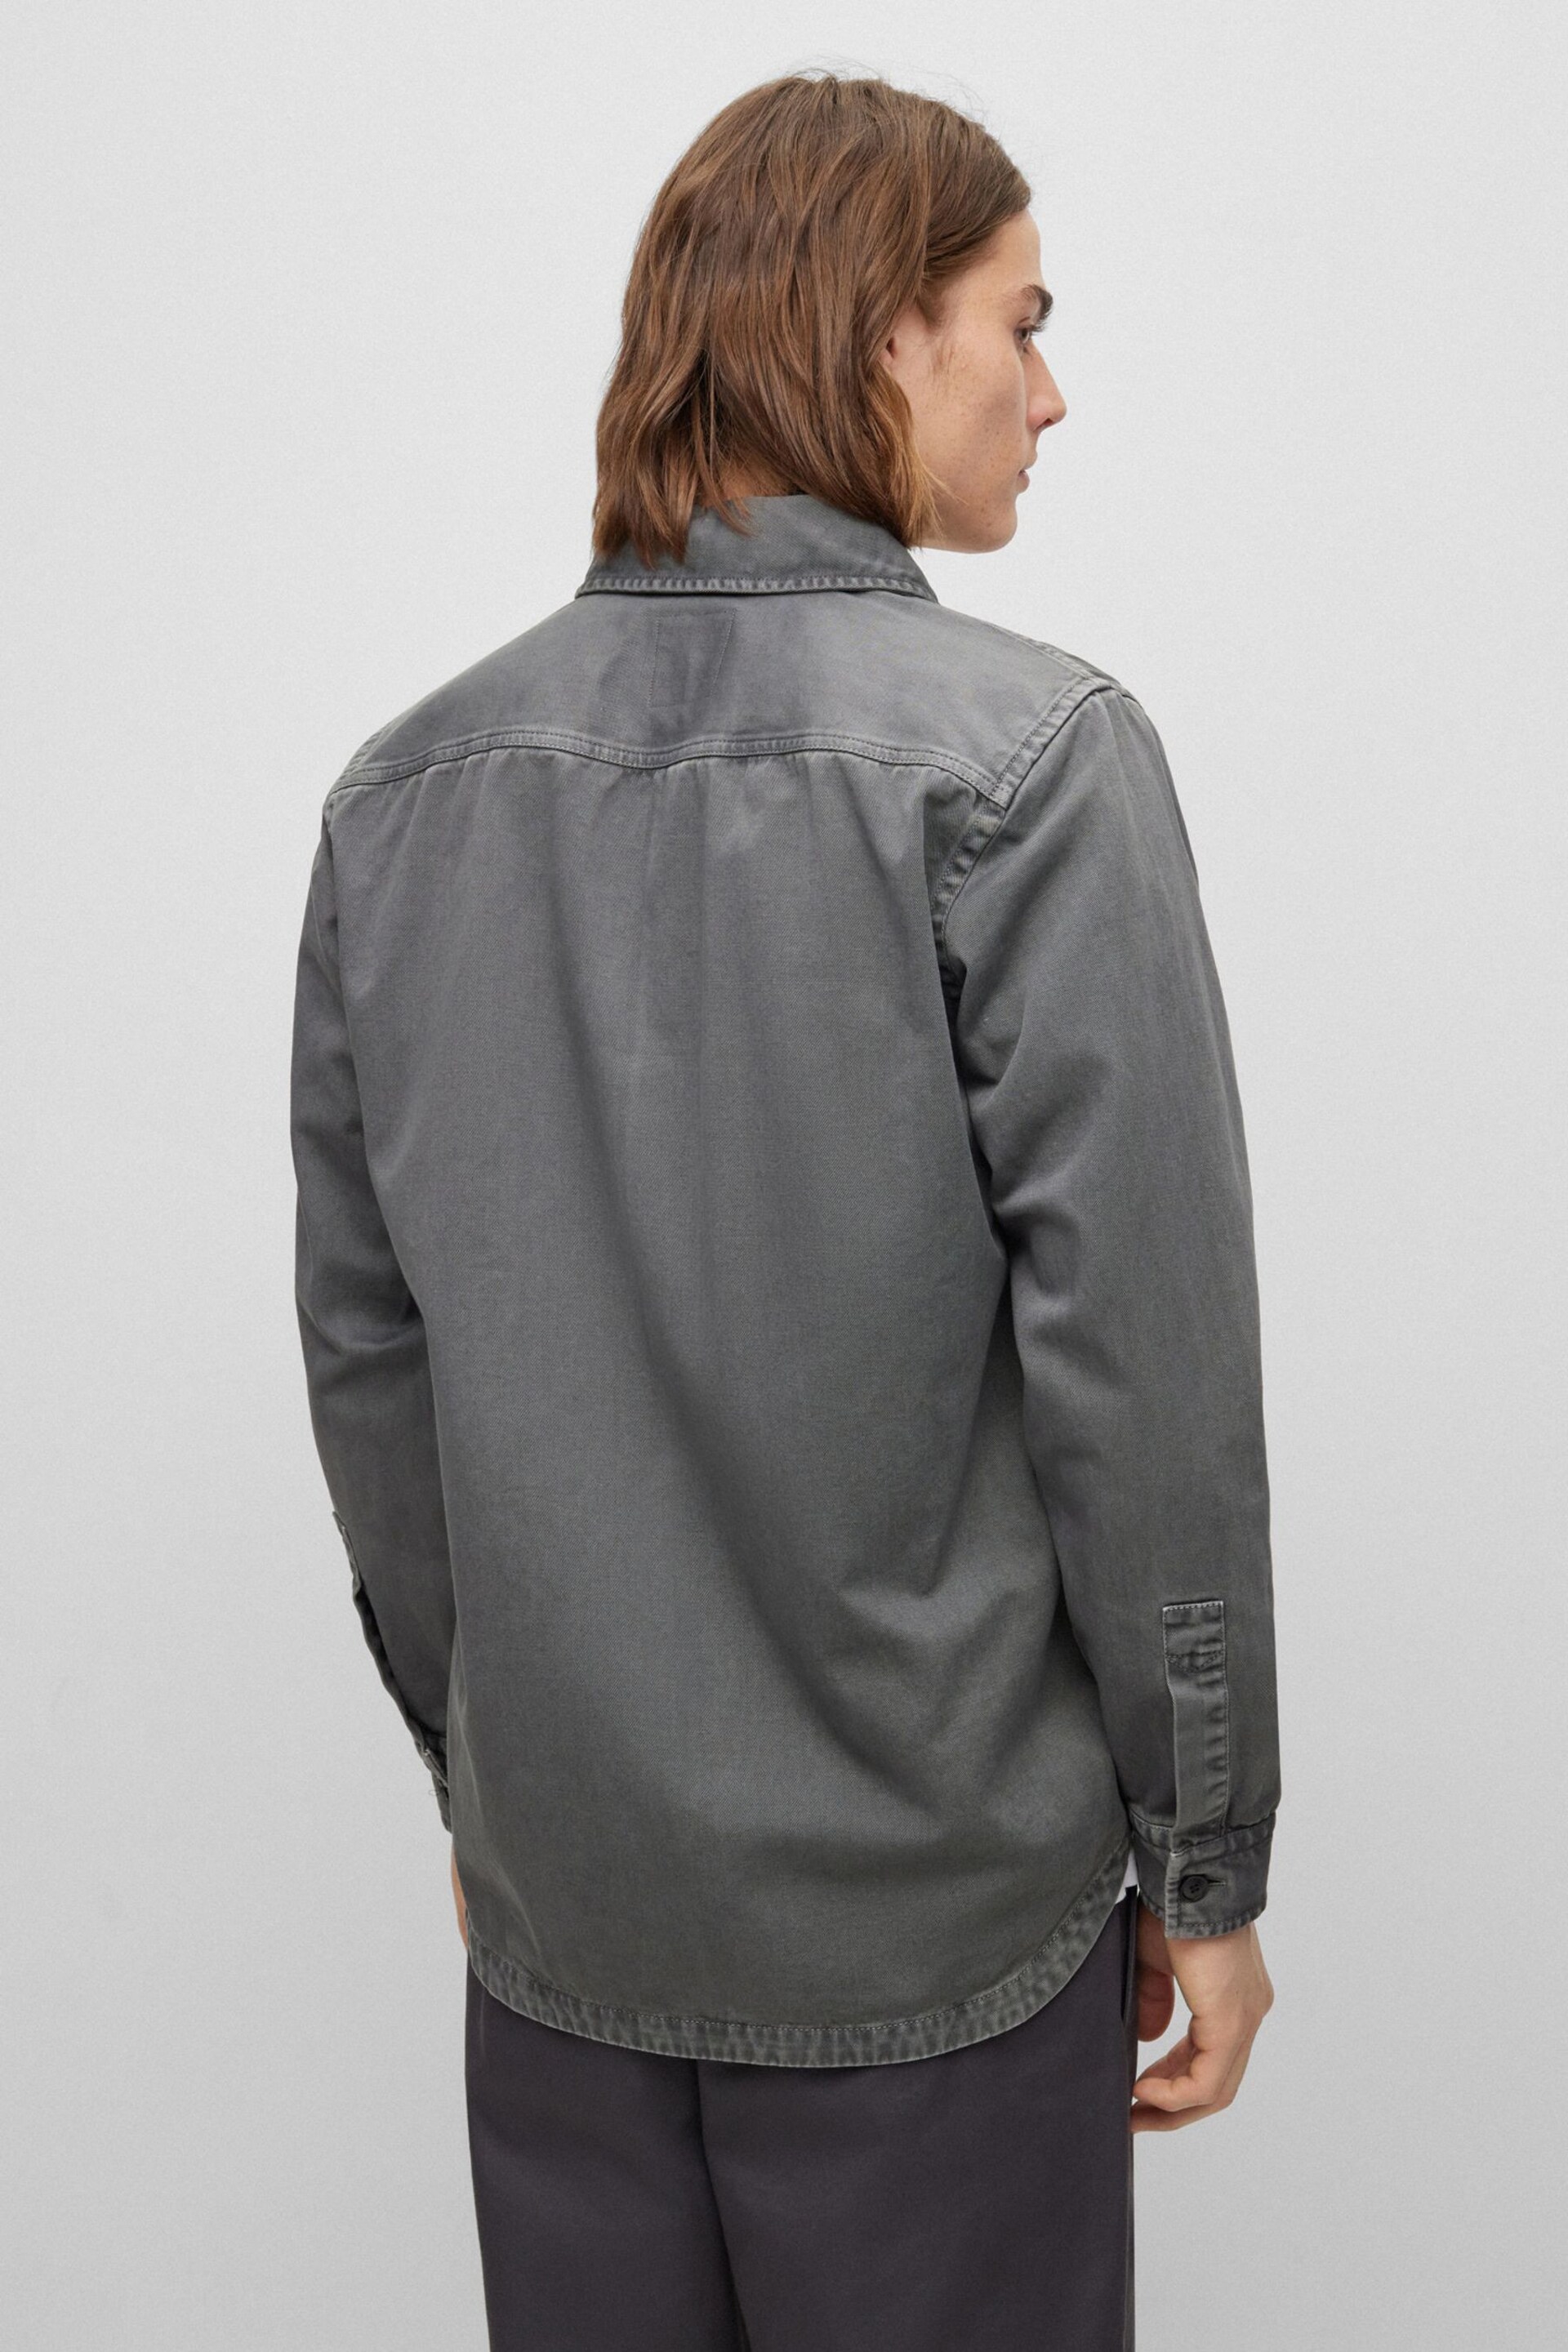 BOSS Grey Garment Dyed Twill Overshirt - Image 3 of 6